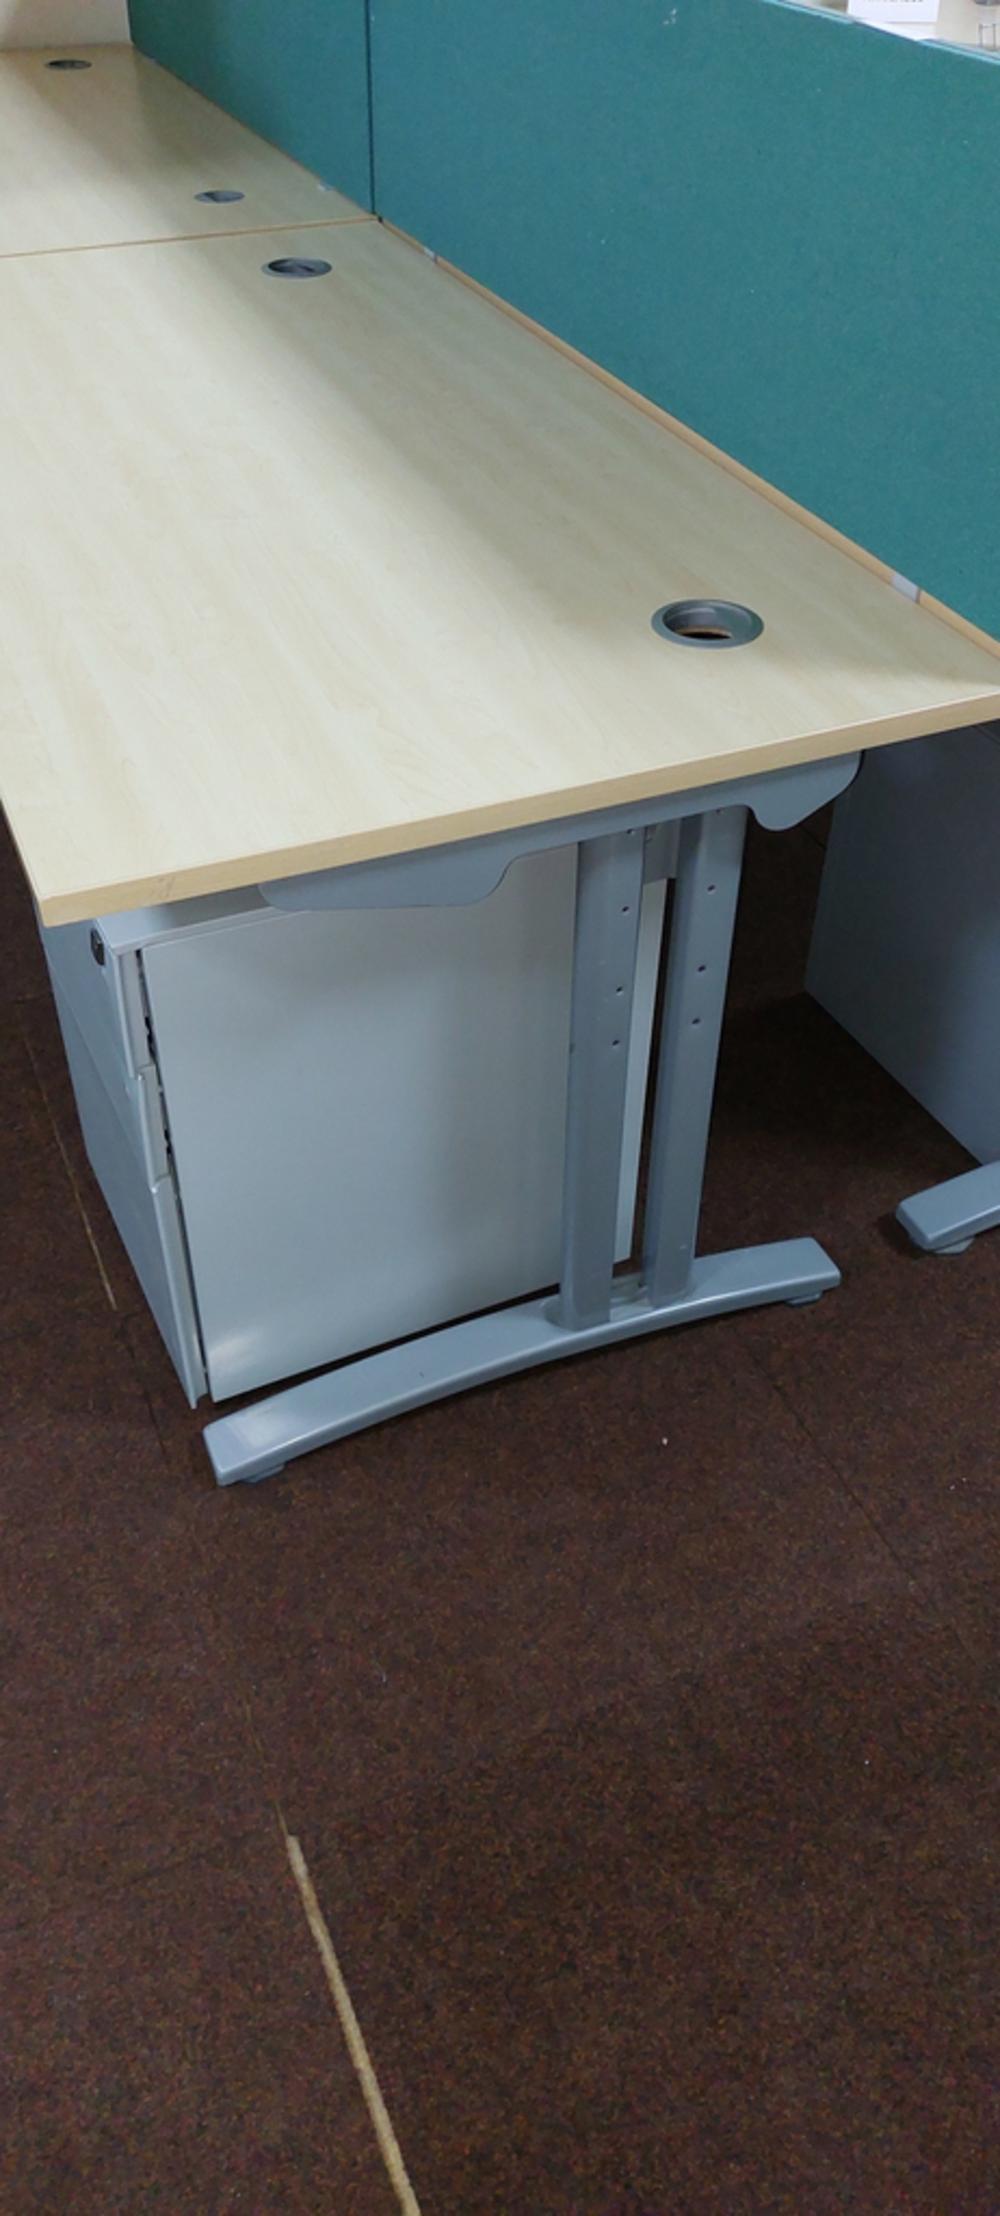 Maple 1600mm Wave Desk With Silver Mobile Pedestal